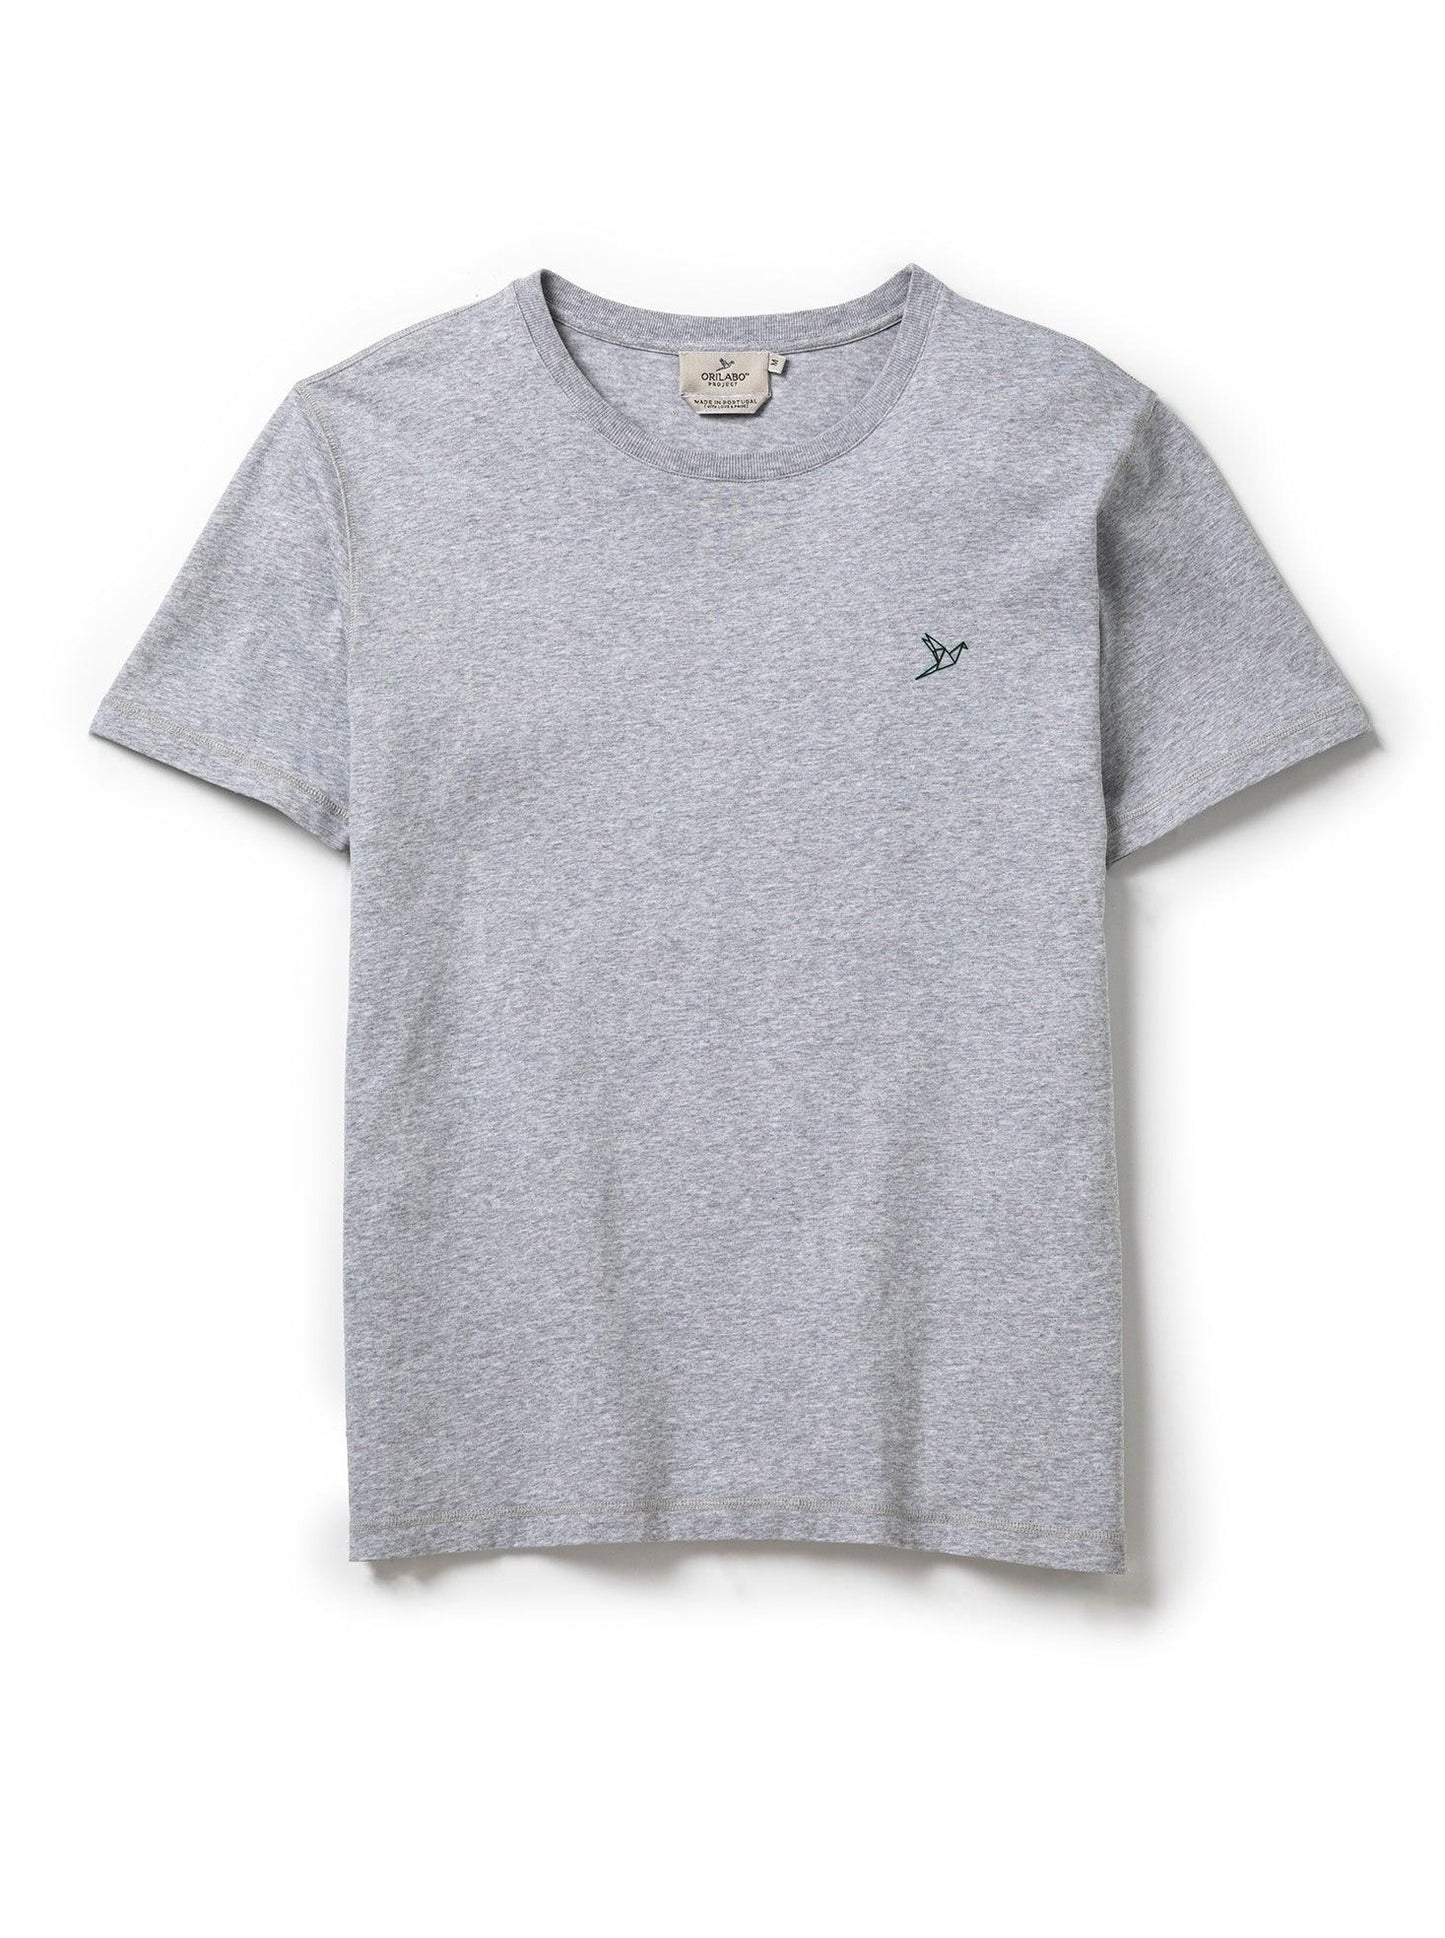 
                  
                    Men's Daisy T-shirt - Grey - ORILABO Project
                  
                